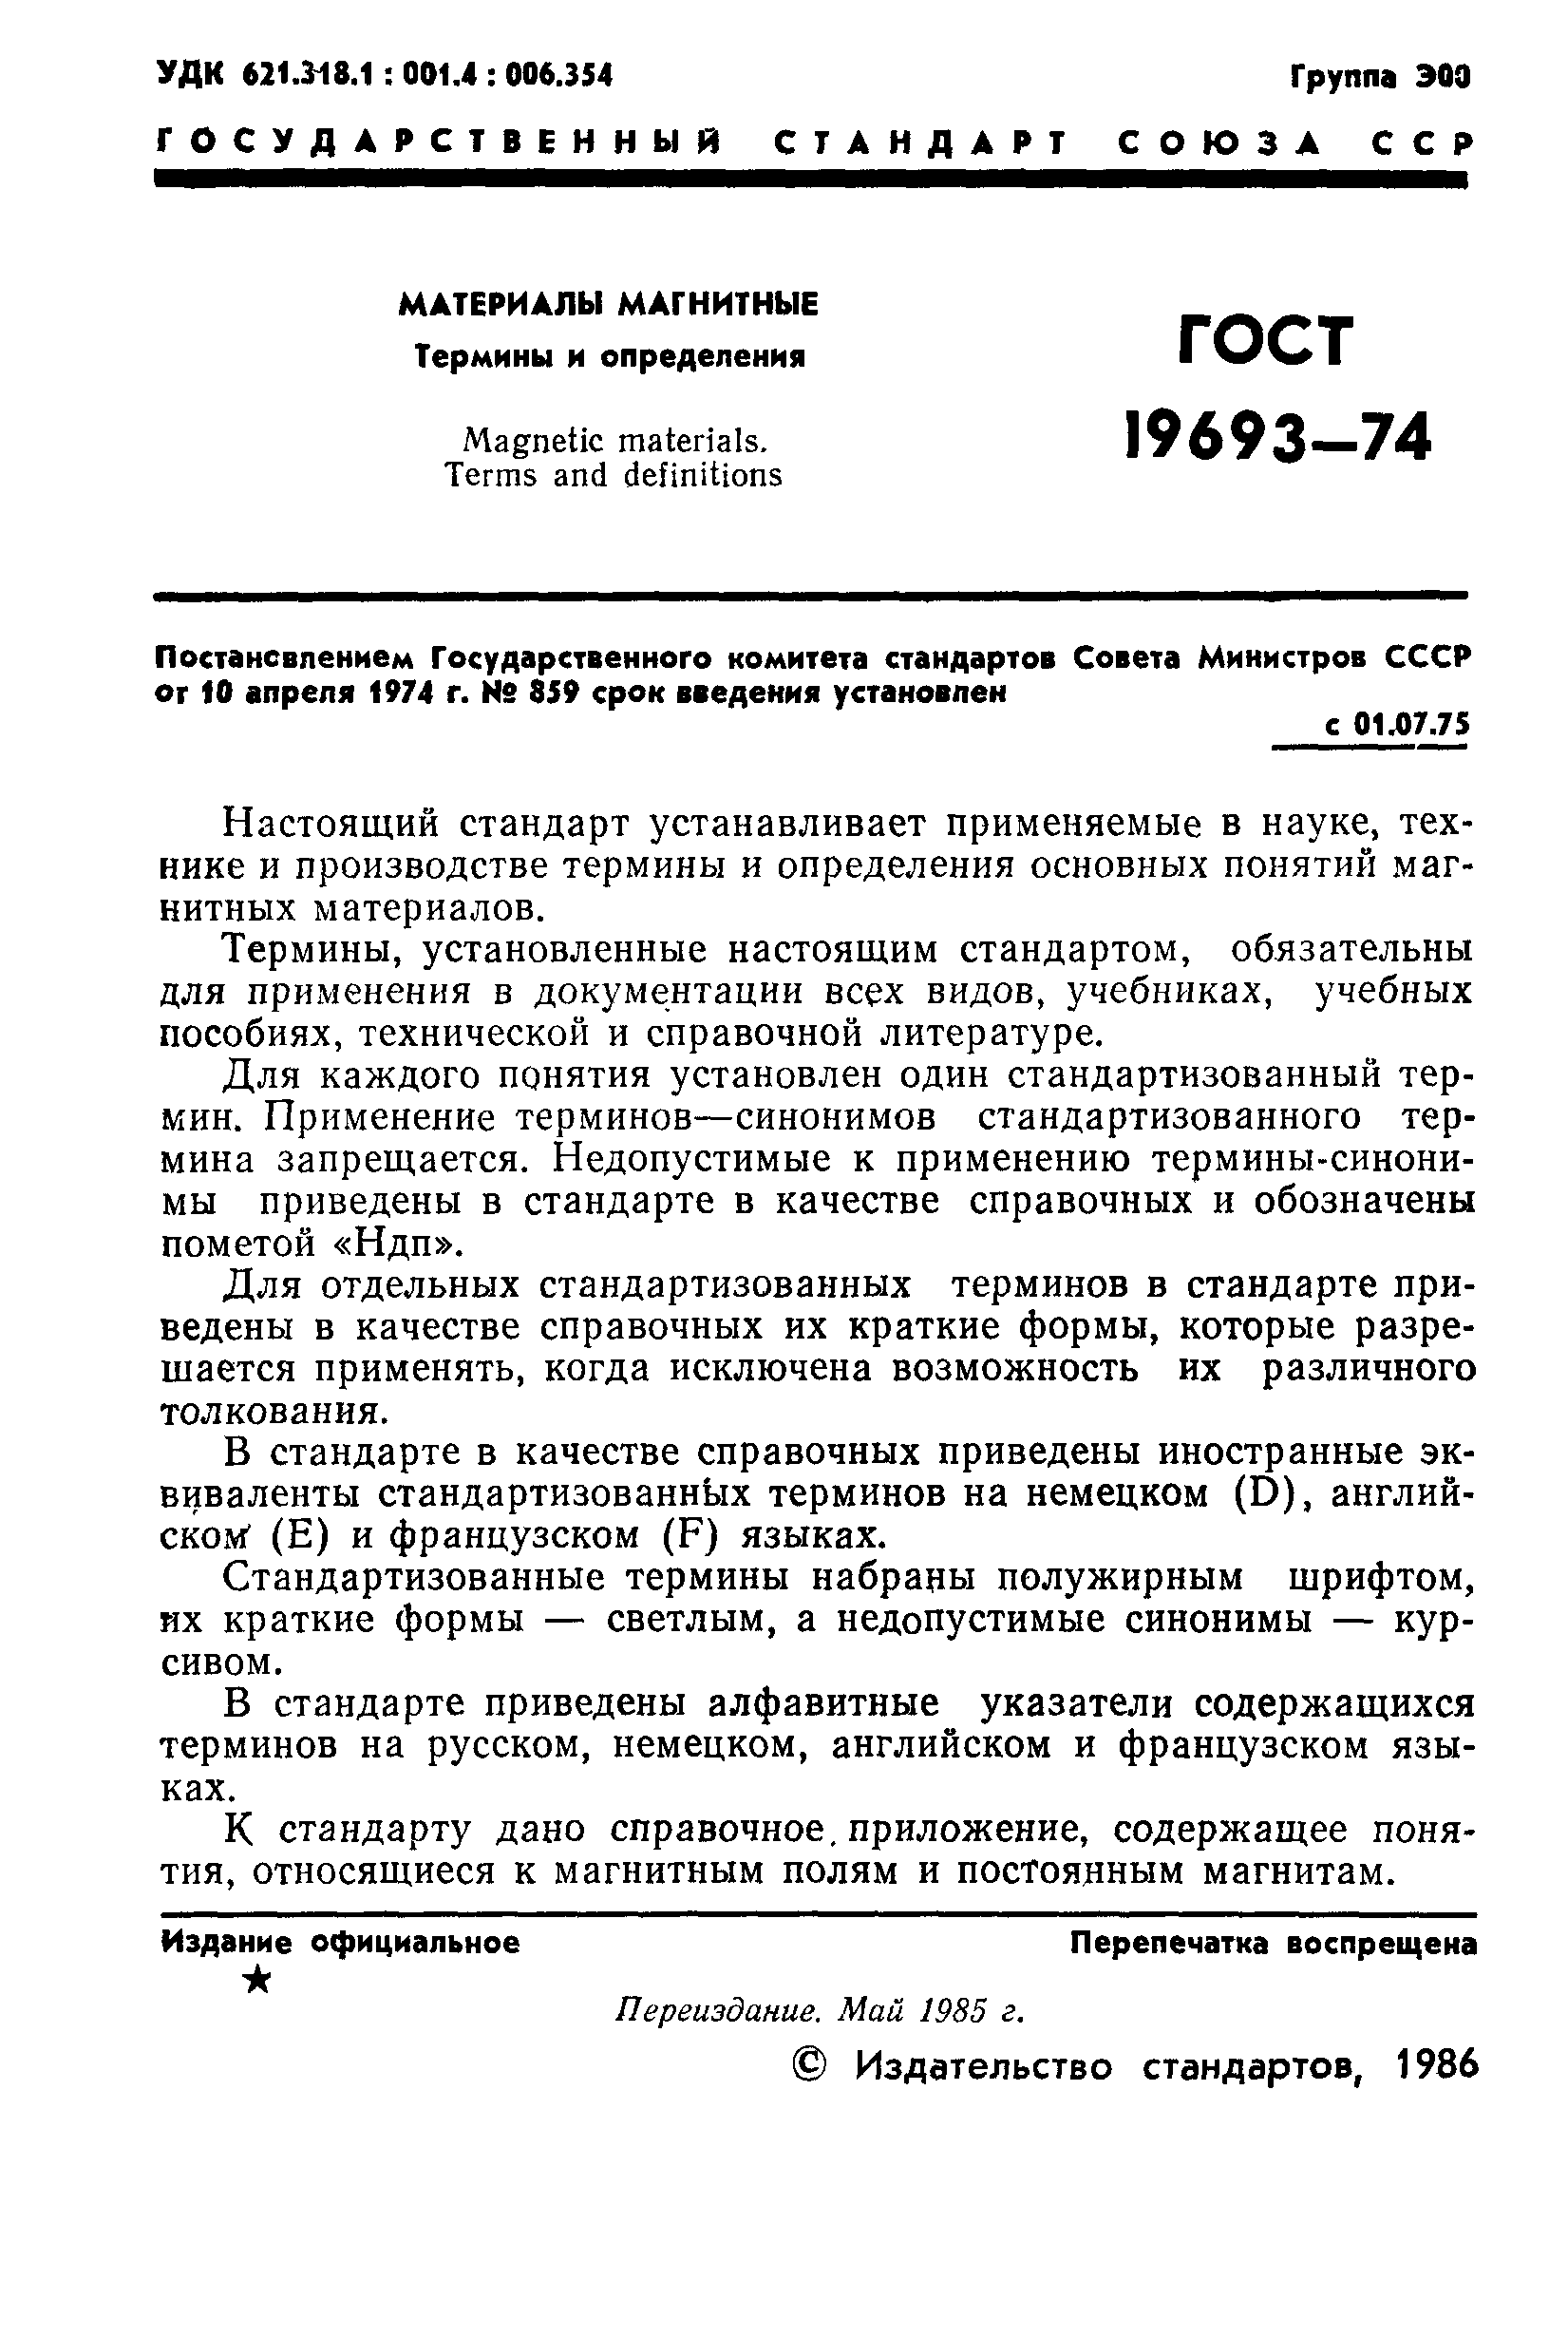 ГОСТ 19693-74